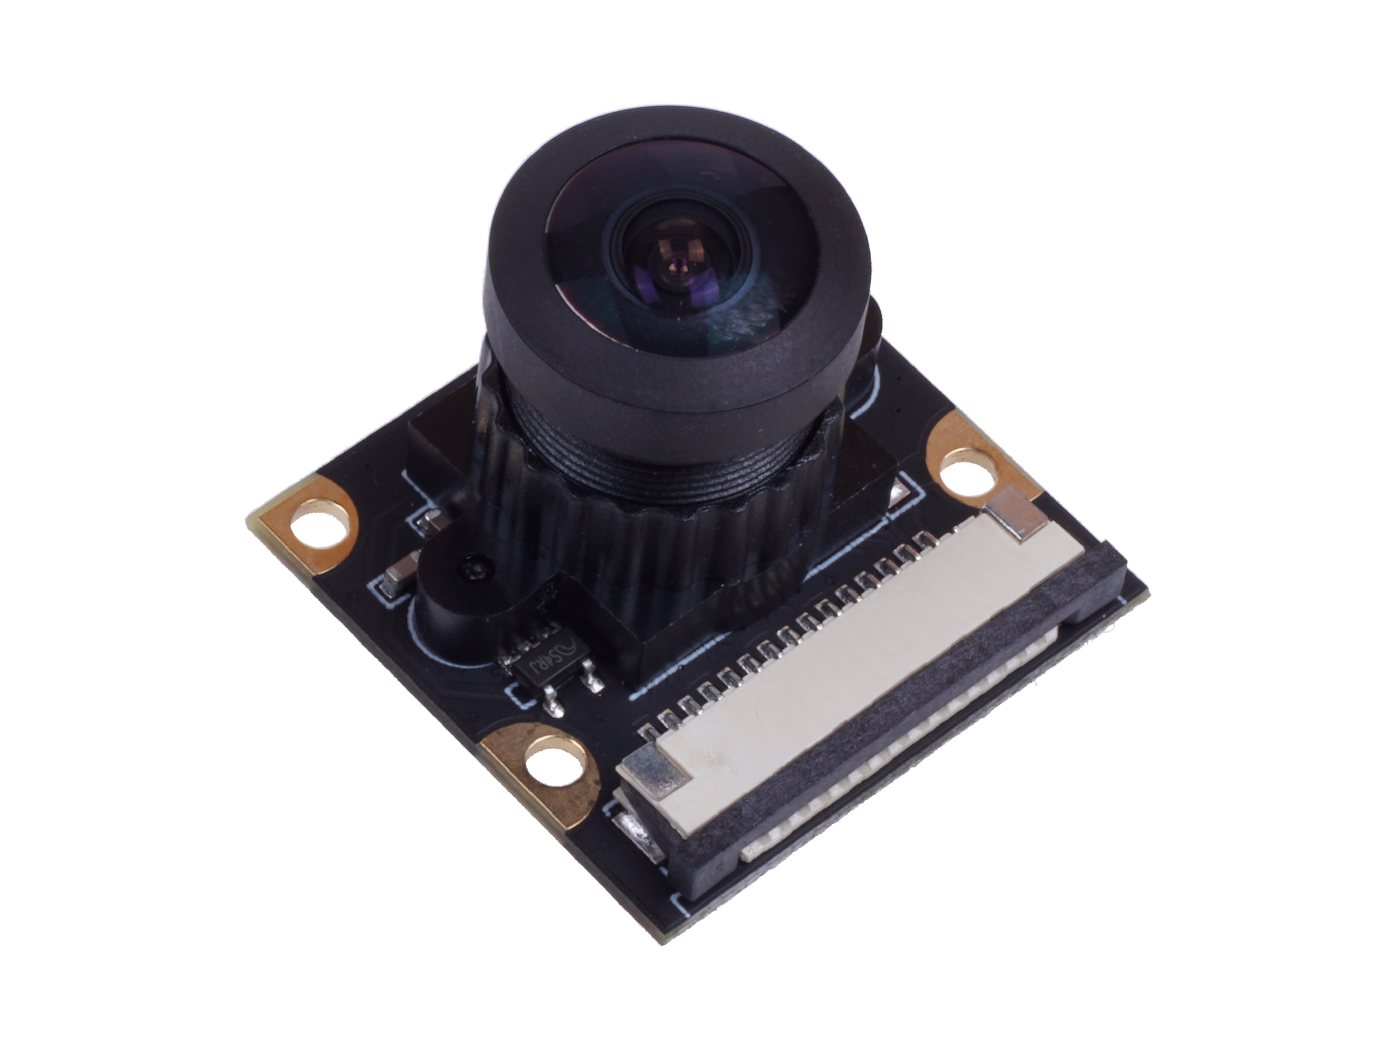 [114992263]IMX219-160 8MP Camera with 160° FOV - Compatible with NVIDIA Jetson Nano/ Xavier NX